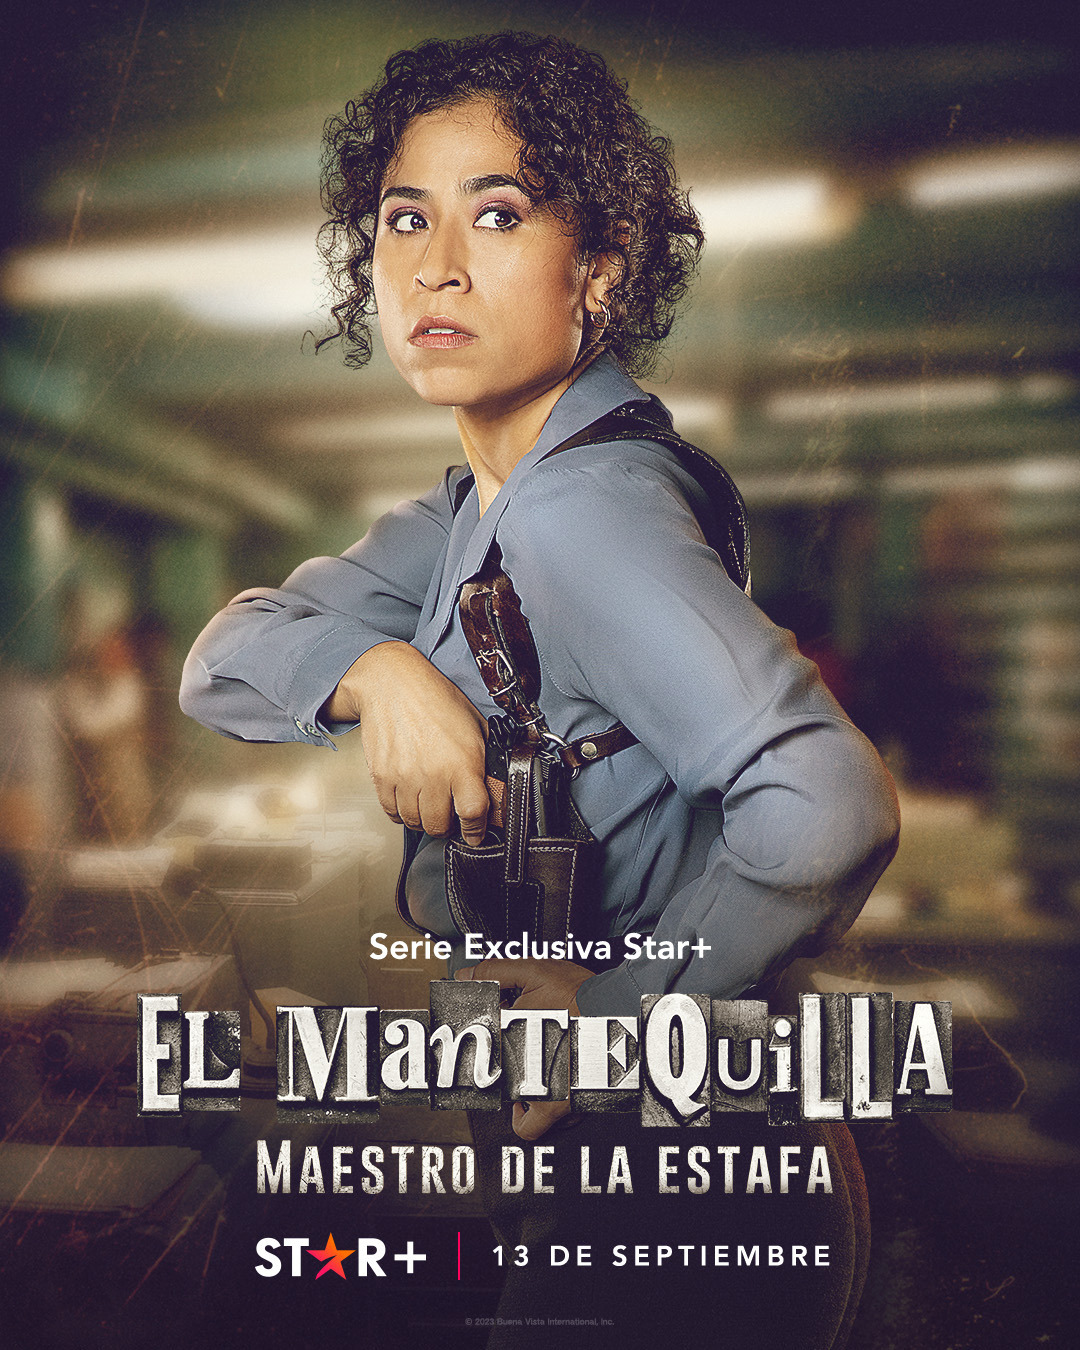 Extra Large TV Poster Image for El Mantequilla: Maestro De La Estafa (#3 of 5)